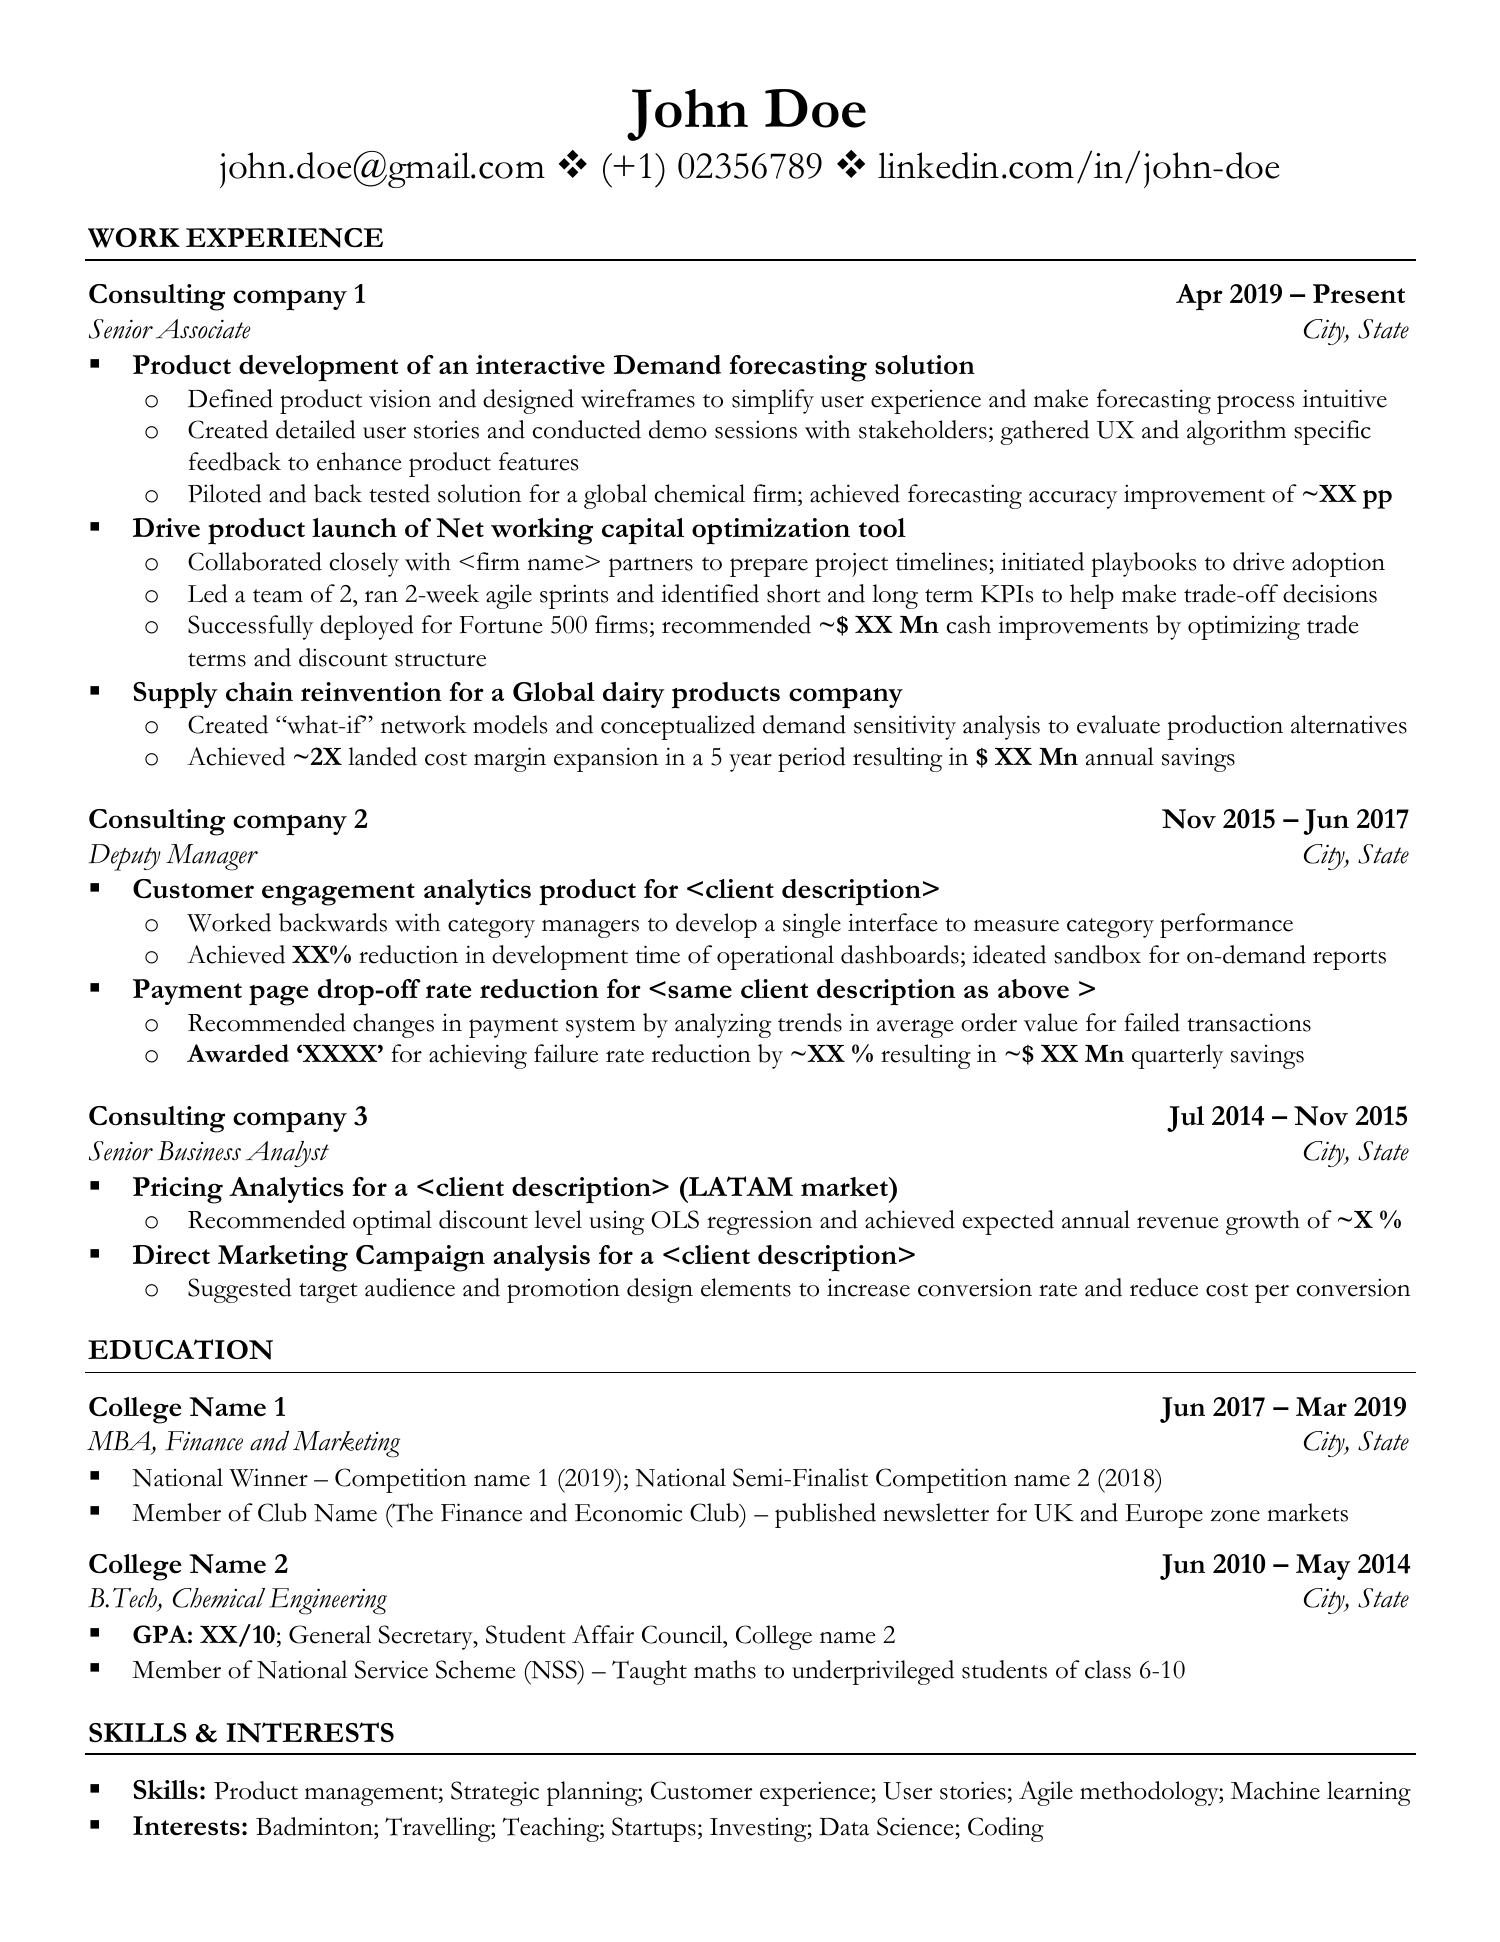 linkedin resume review reddit